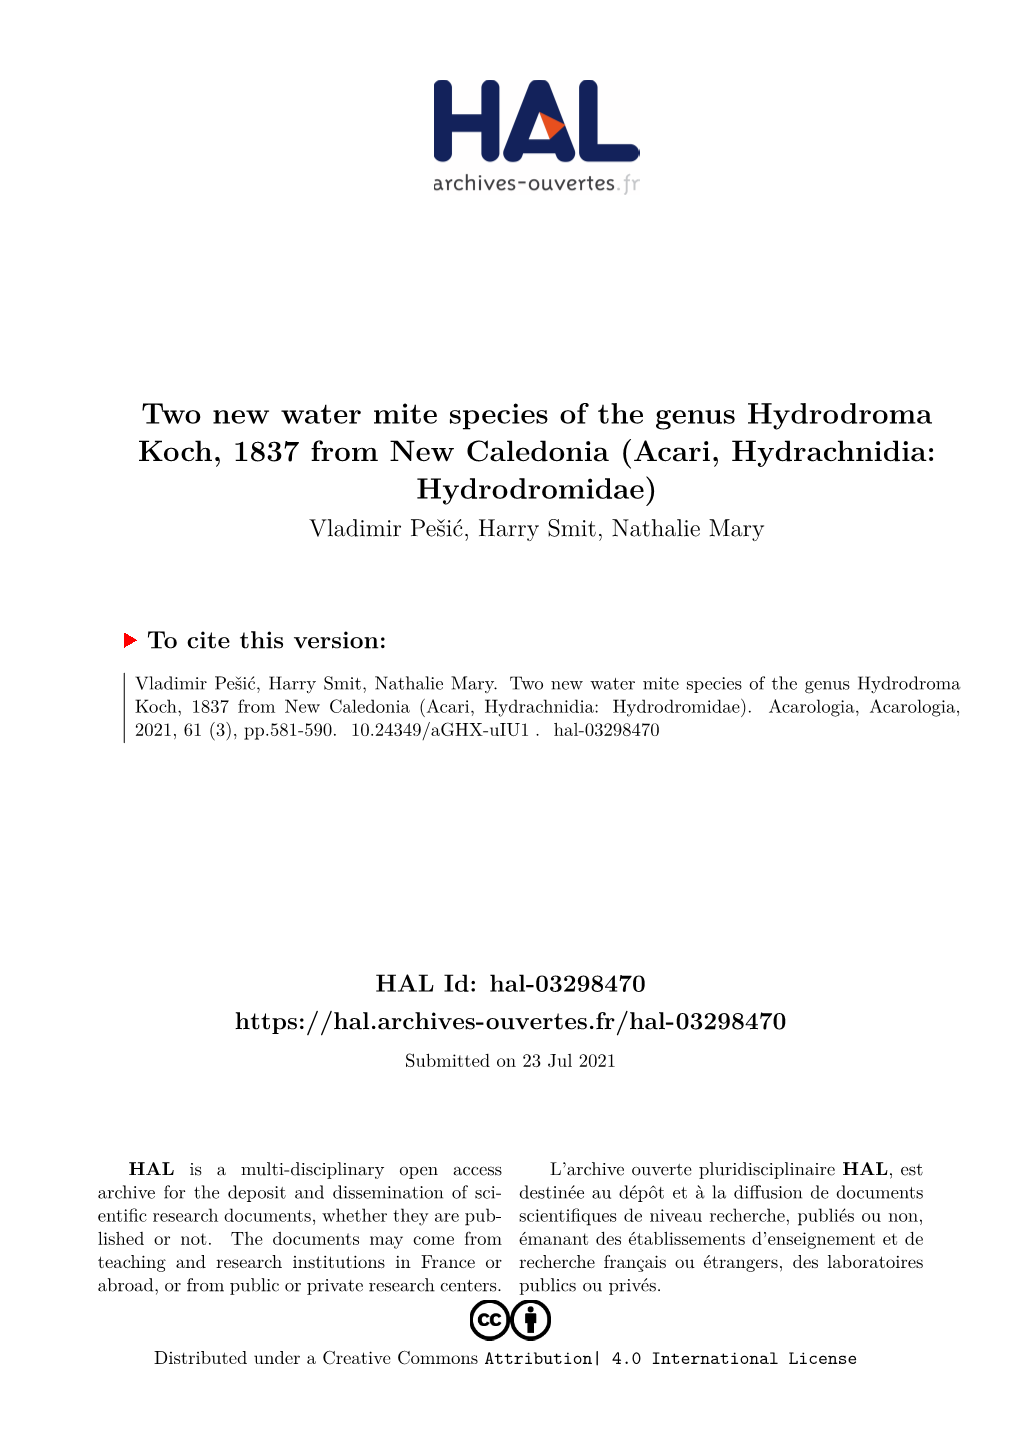 Two New Water Mite Species of the Genus Hydrodroma Koch, 1837 from New Caledonia (Acari, Hydrachnidia: Hydrodromidae) Vladimir Pešić, Harry Smit, Nathalie Mary